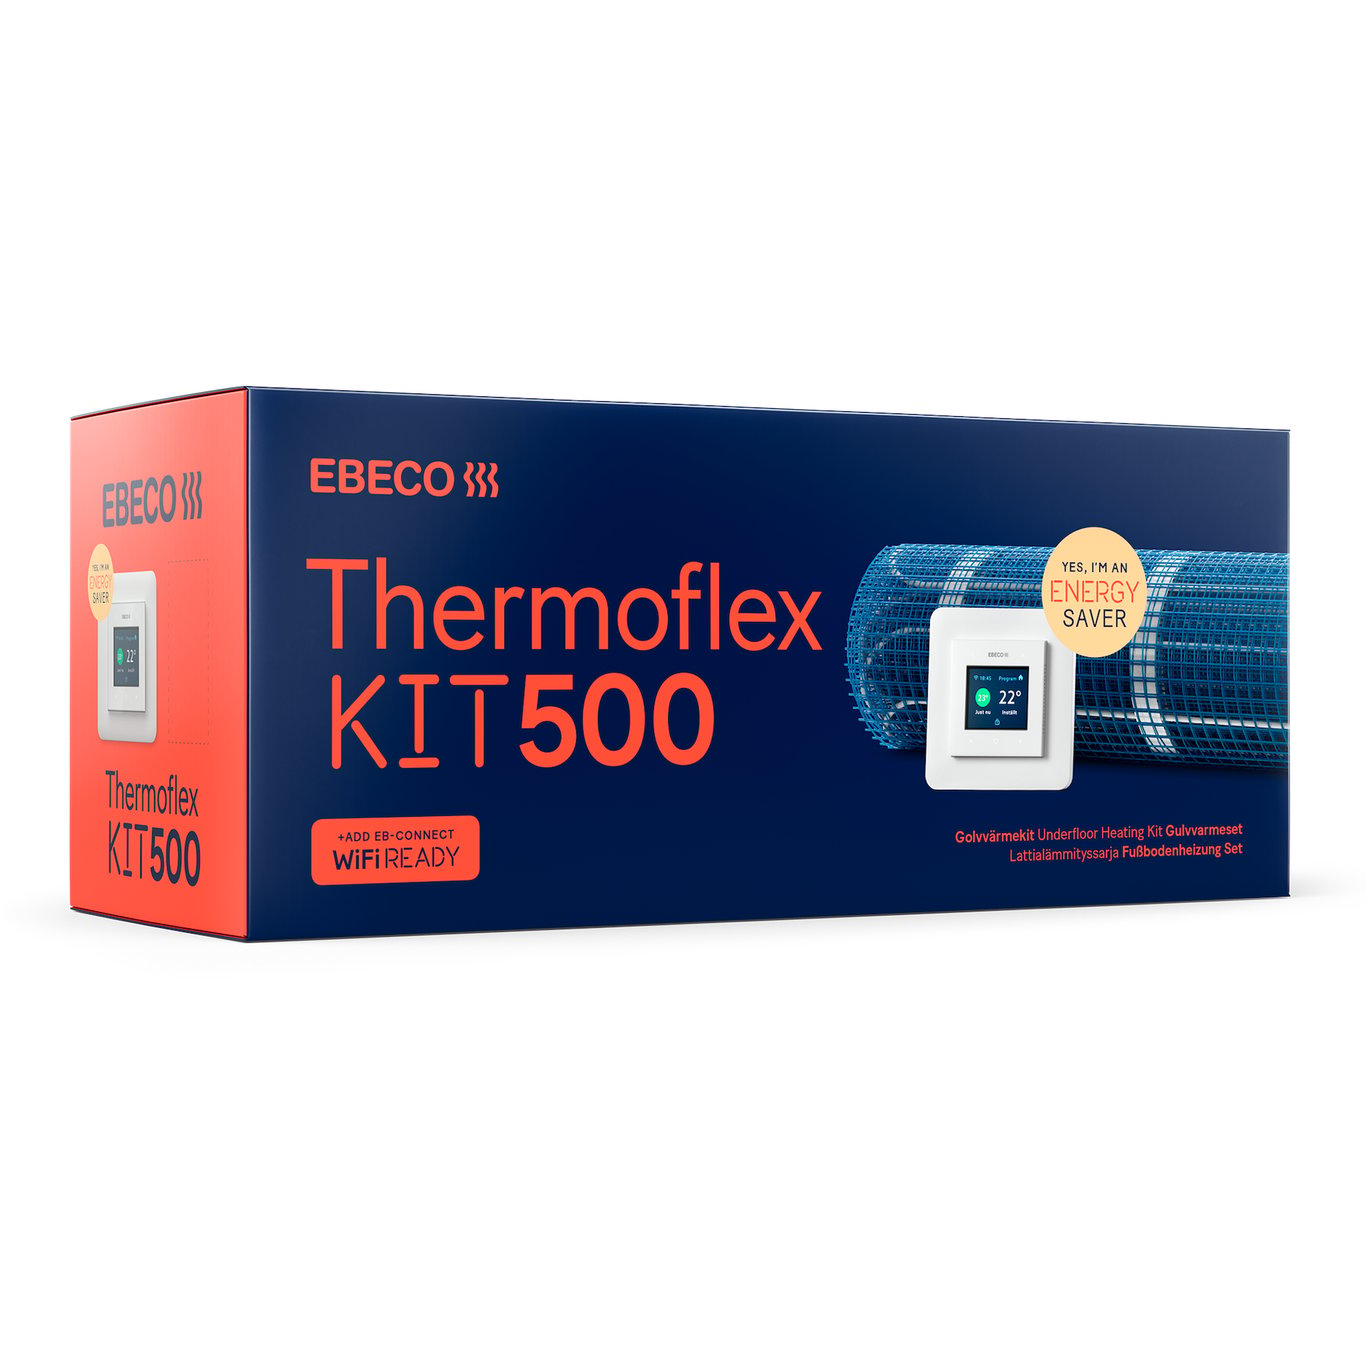 EBECO THERMOFLEX KIT 500 1,7M2 200W